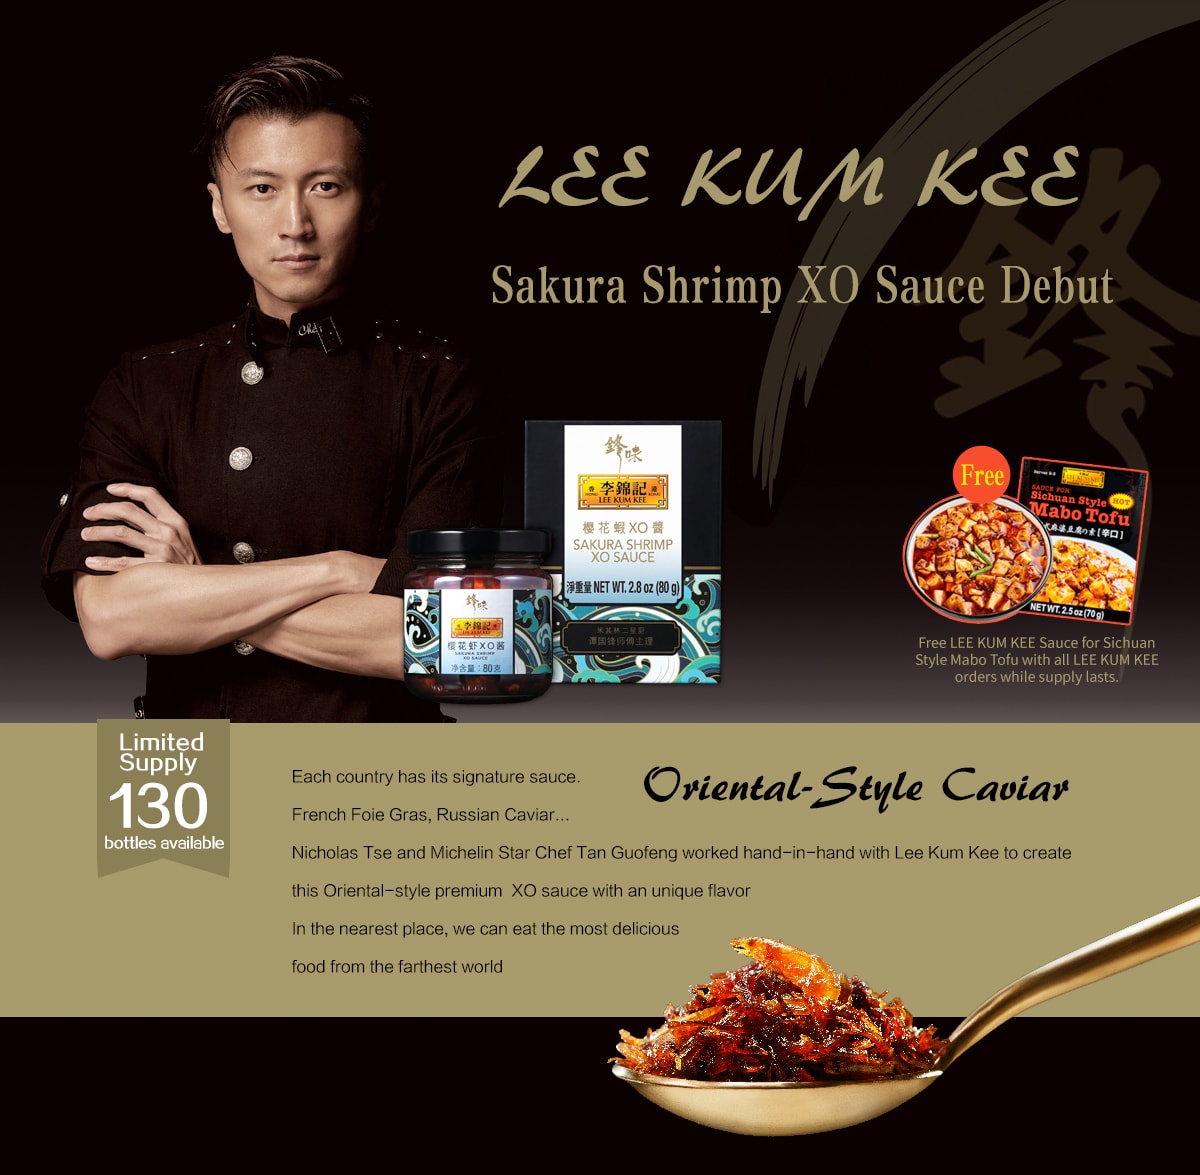 LEE KUM KEE Sakura Shrimp XO Sauce Debut